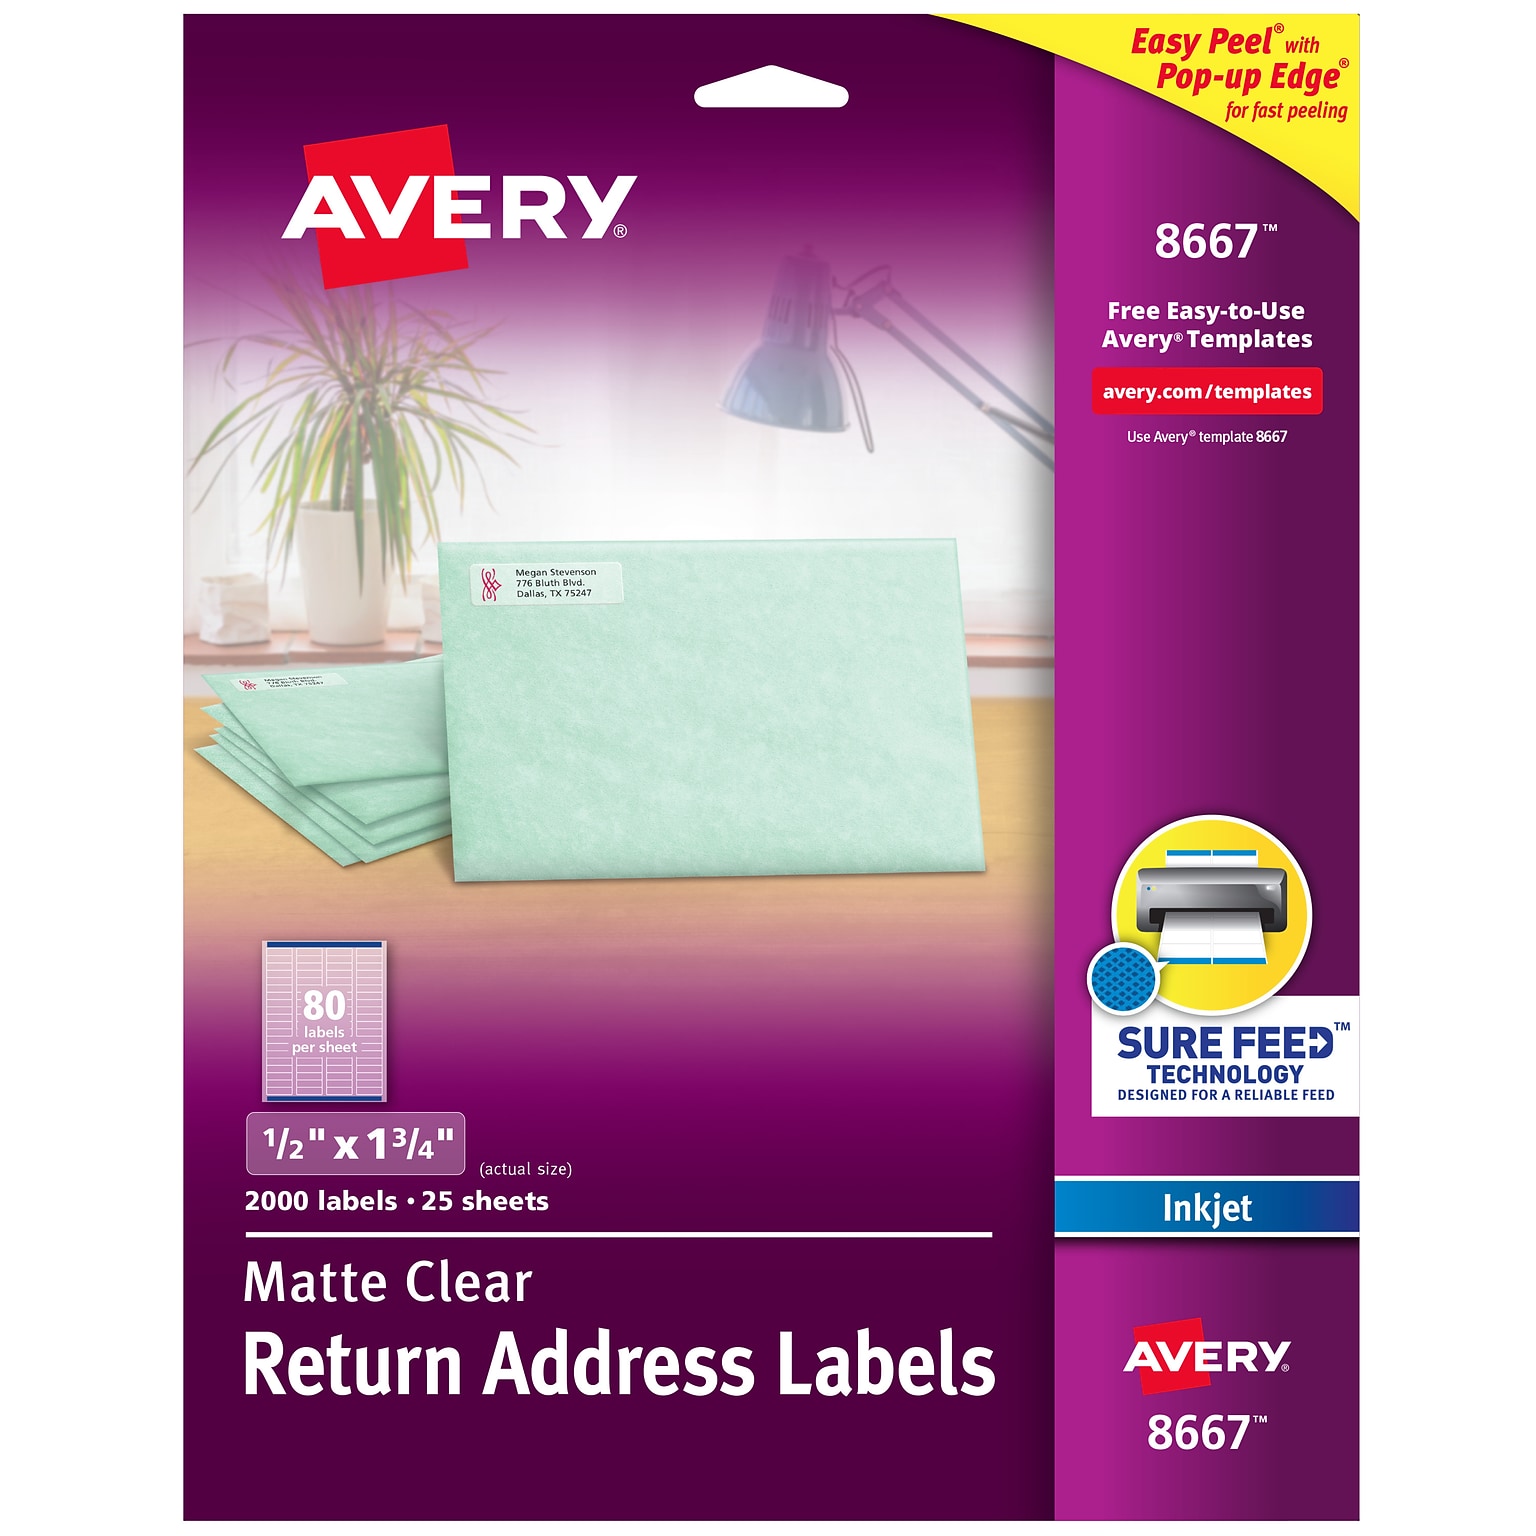 Avery Easy Peel Inkjet Return Address Labels, 2/3 x 1-3/4, Clear, 80 Labels/Sheet, 25 Sheets/Pack (8667)